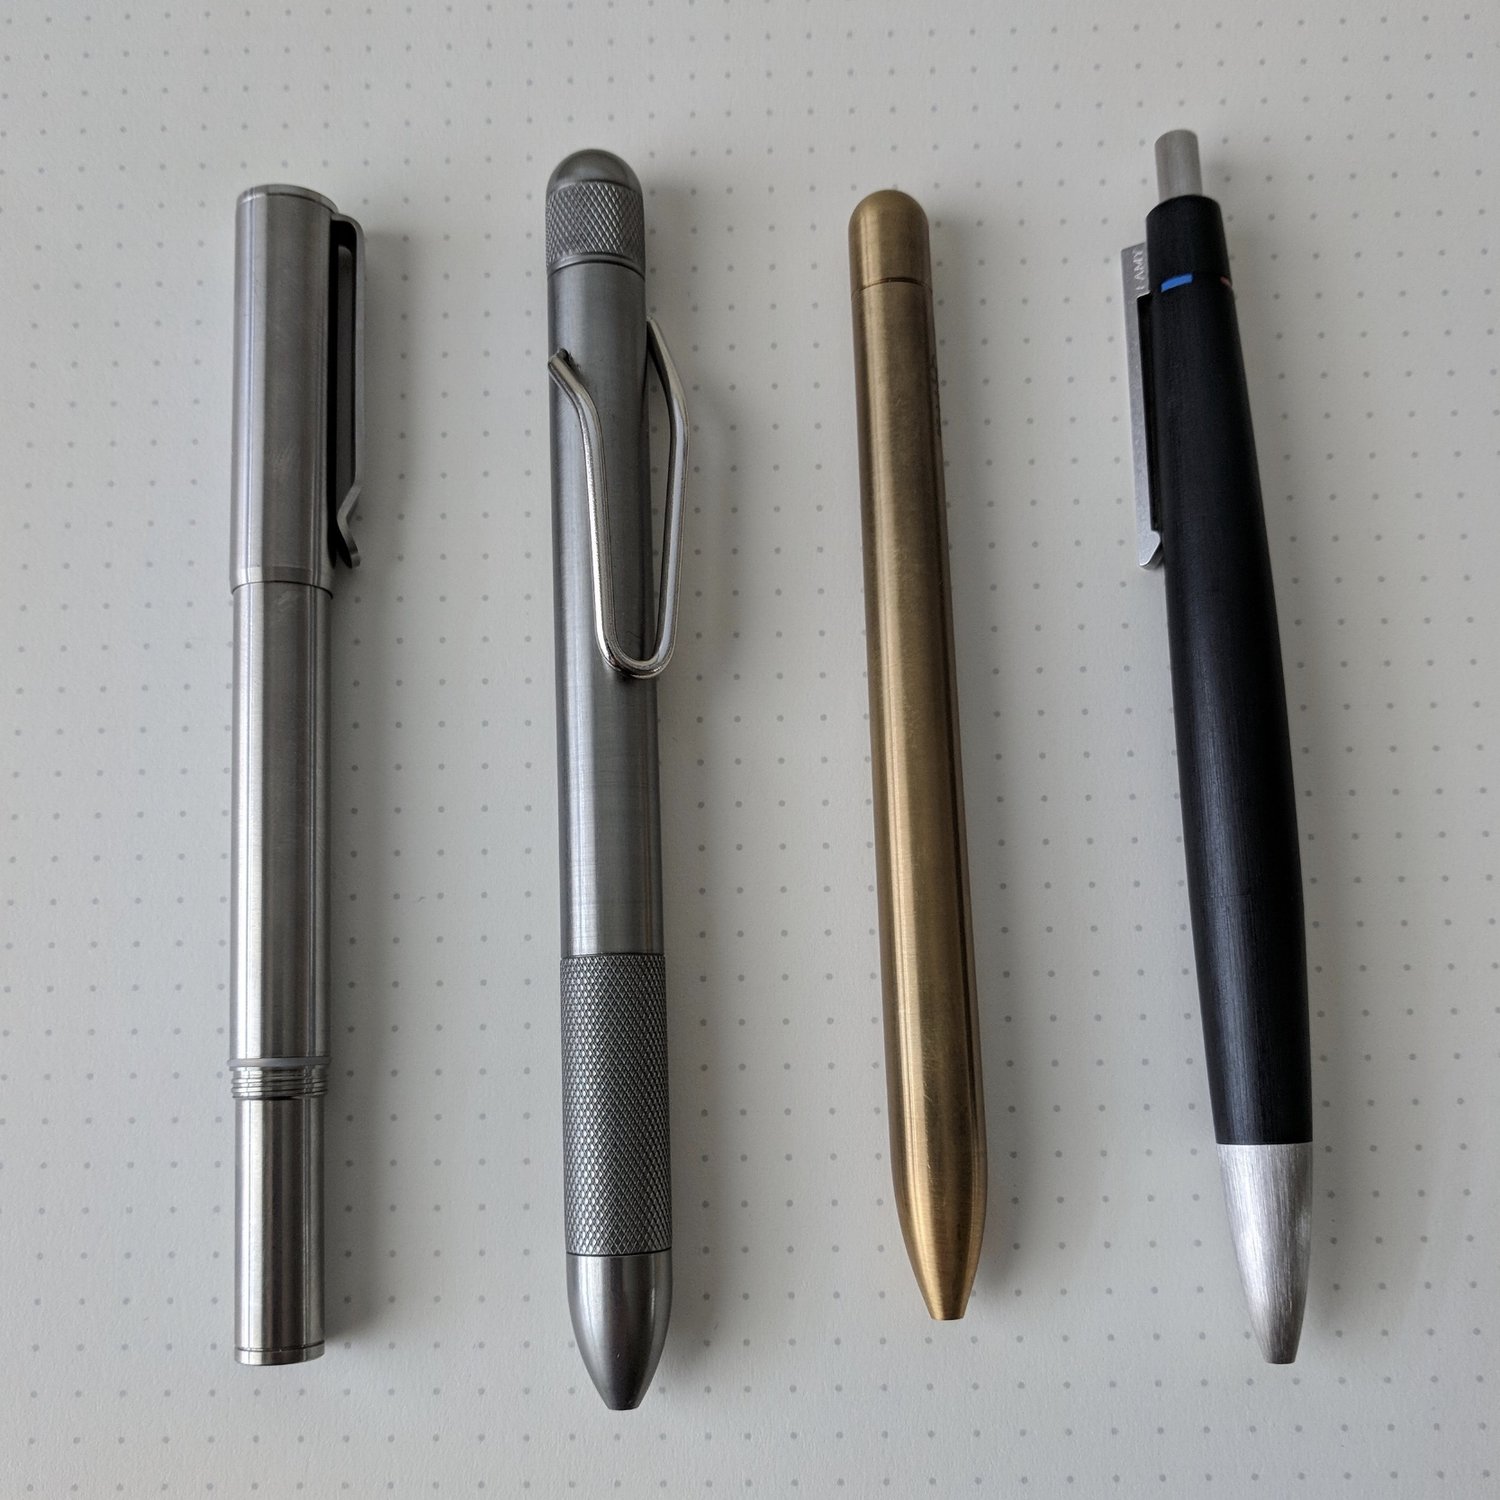 5 Way Multi Pen  Multi pen, Pen, Pen fashion